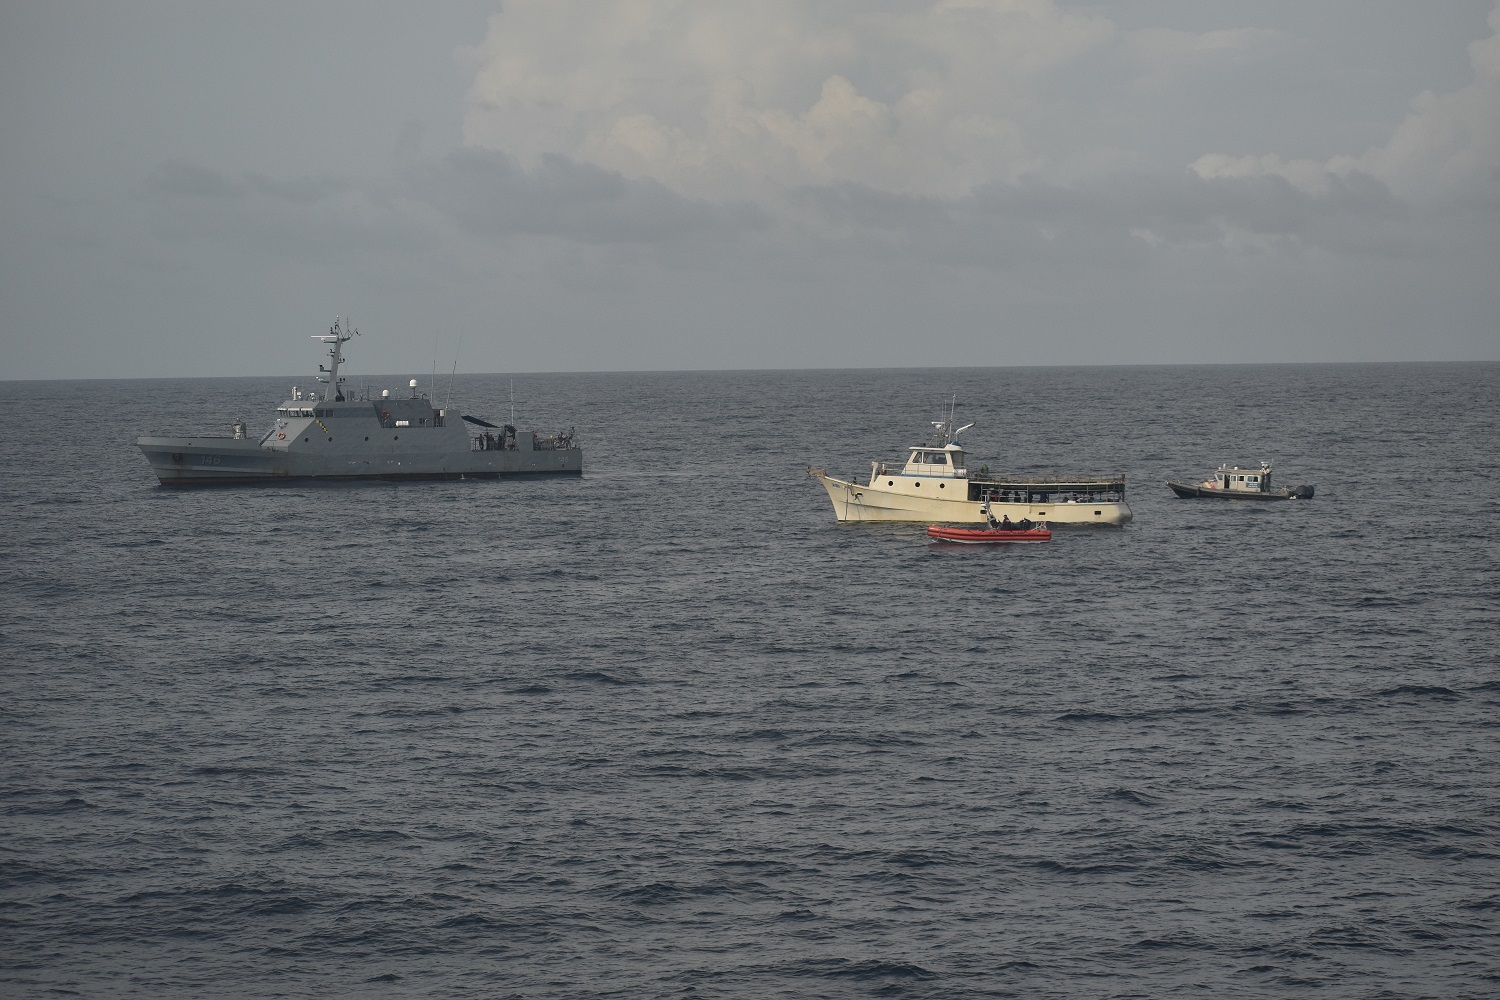 Coast Guard, partner agencies interdict suspected drug smugglers 46 miles northeast of Panama